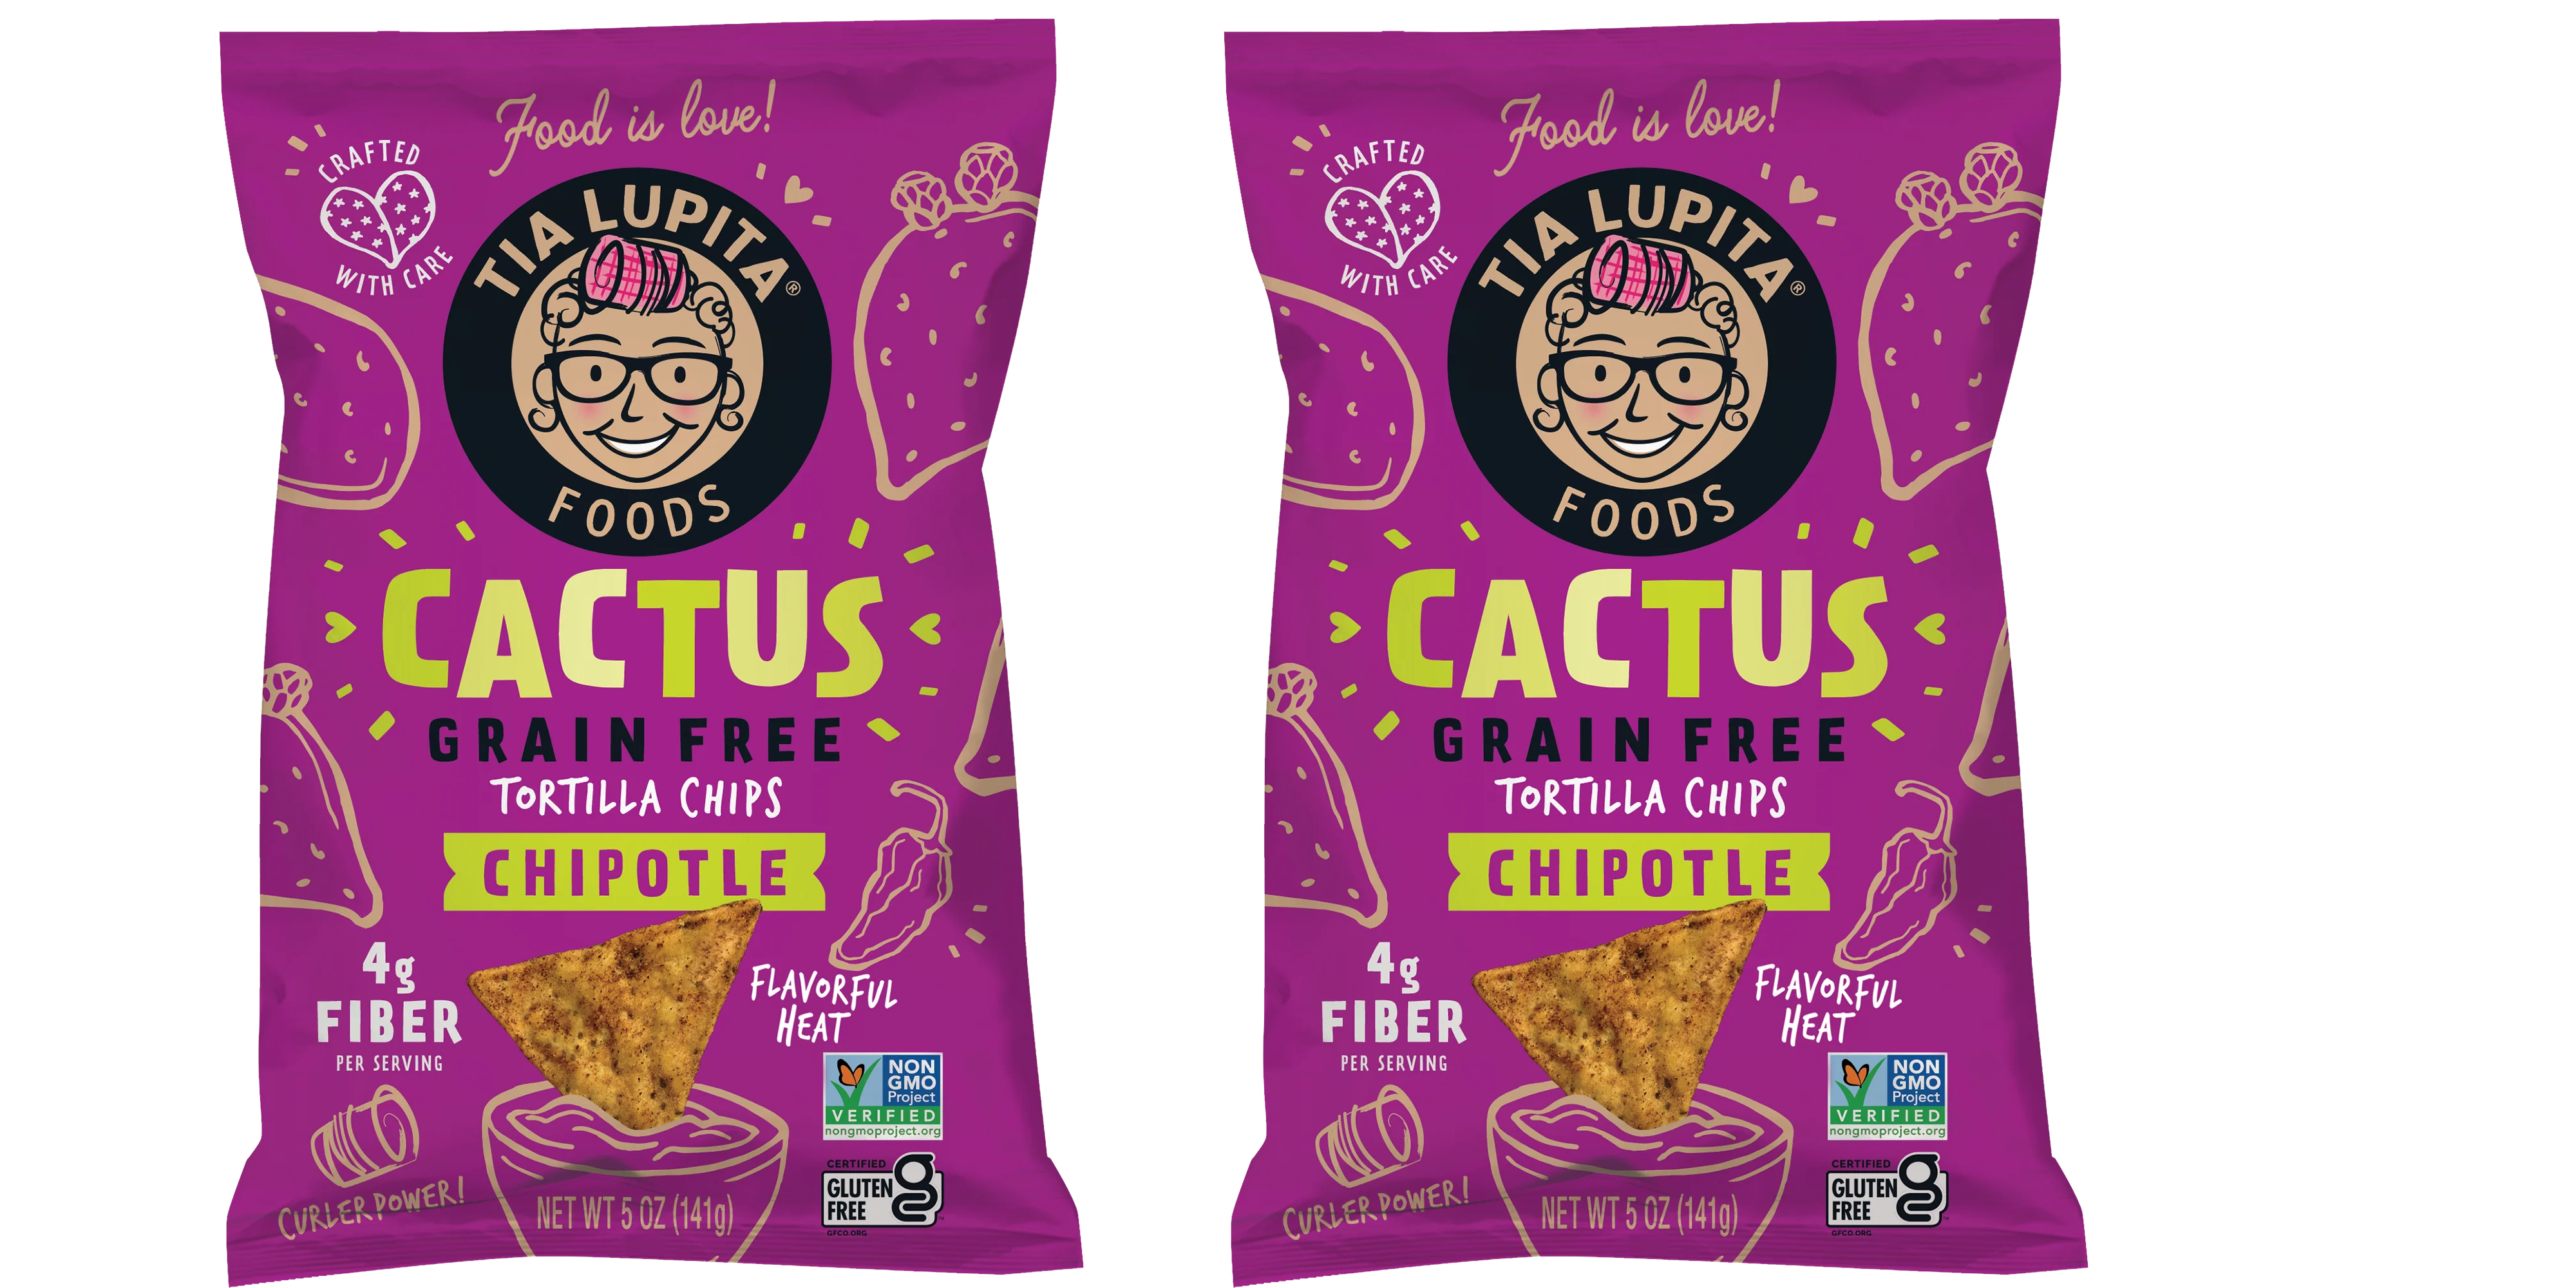 Tia Lupita Cactus Tortilla Chips - Chipotle flavor